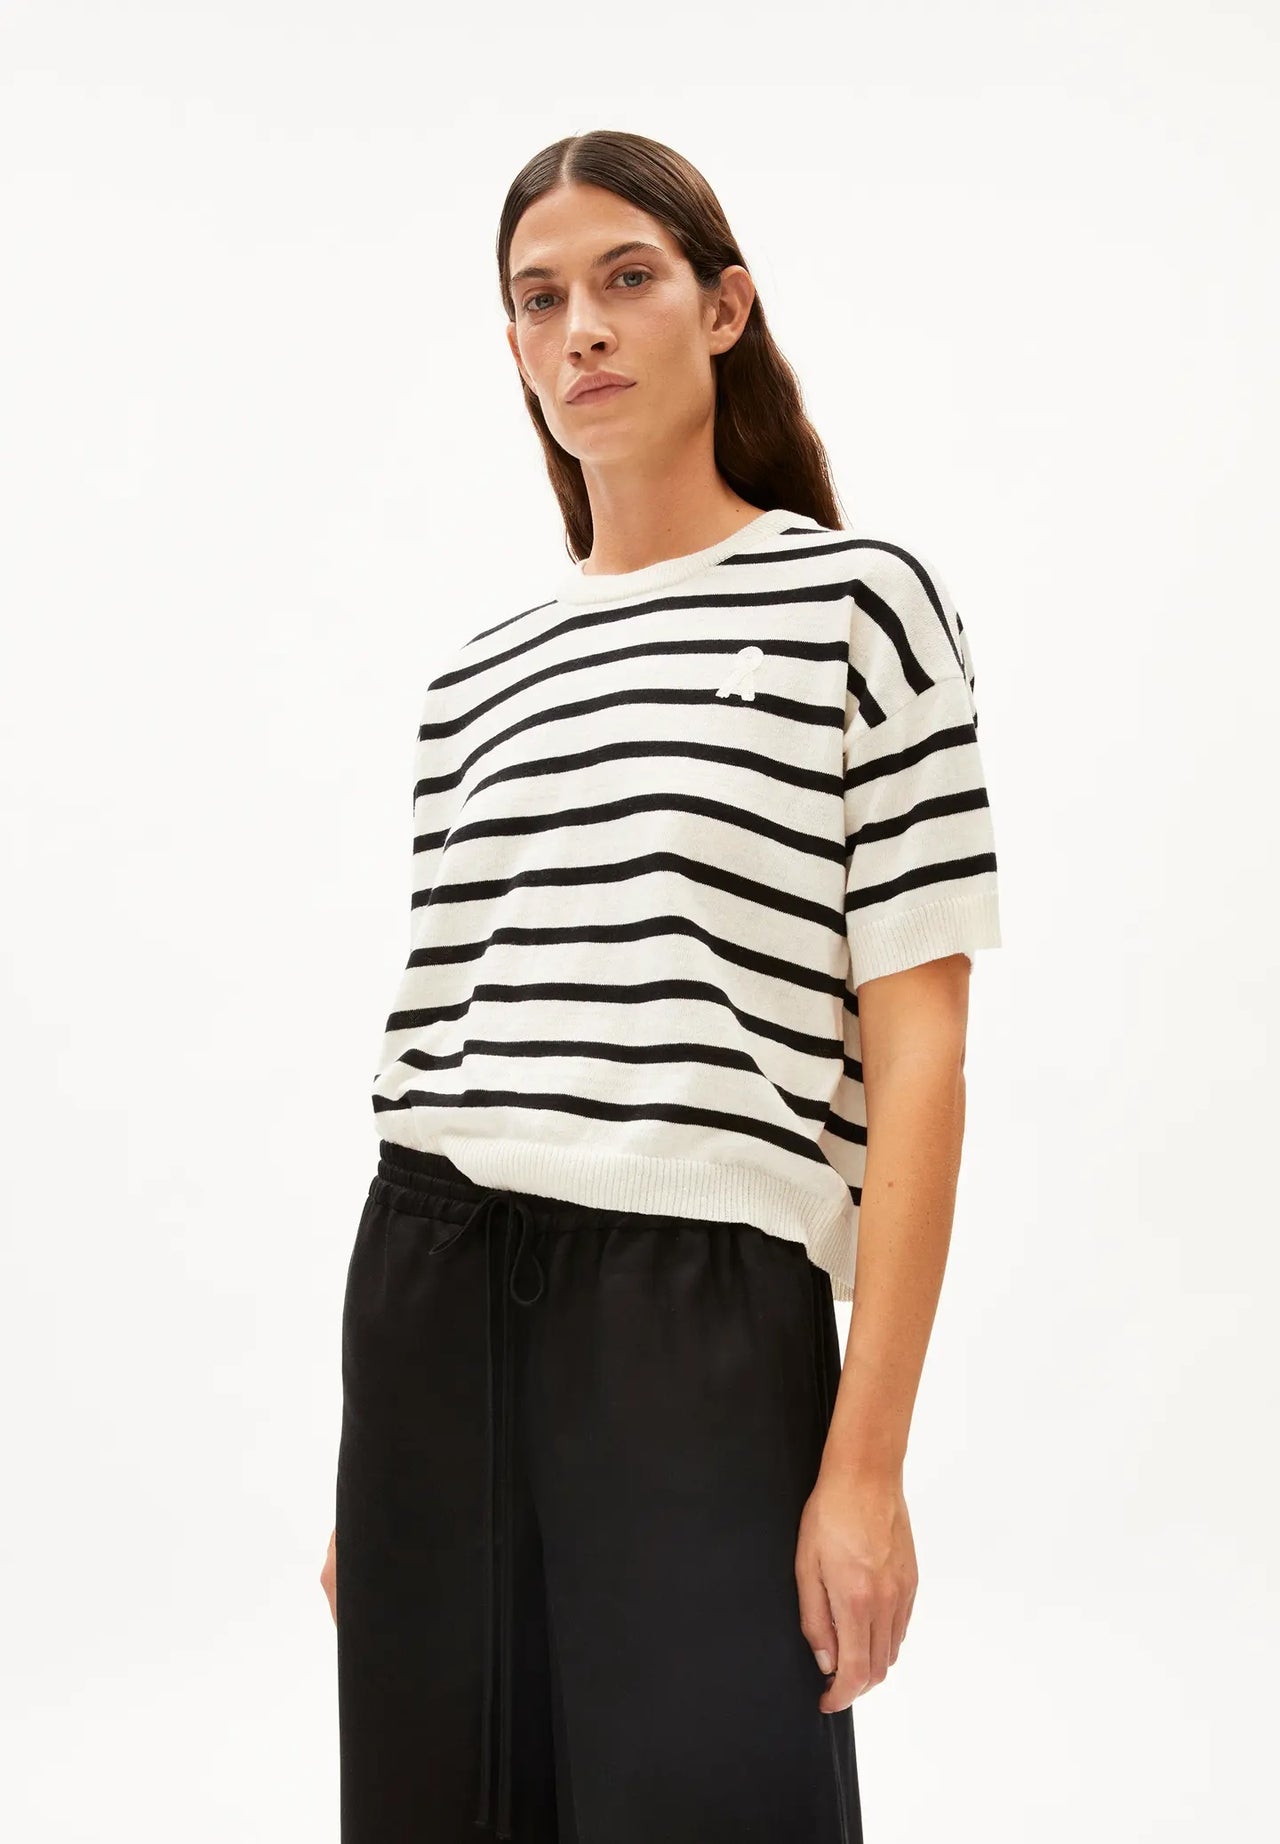 Lillaas Stripes Off White-Black - LEEF mode en accessoires